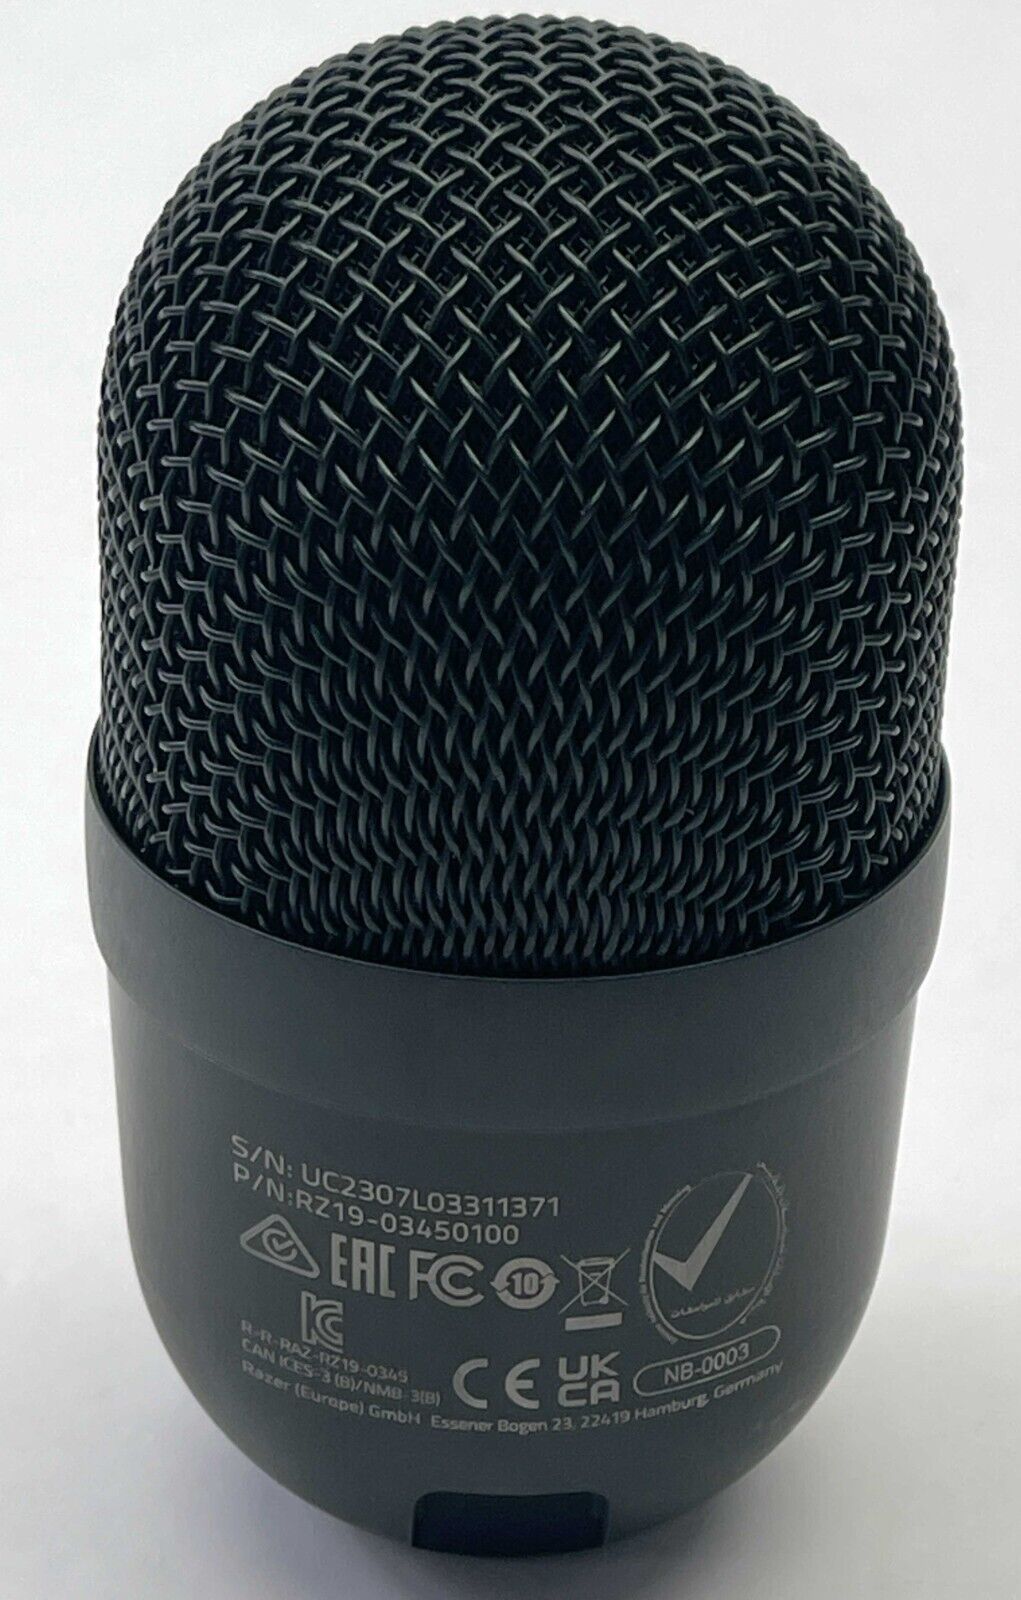 Razer Seiren Mini Streaming Microphone RZ19-0345 Microphone Only- Black